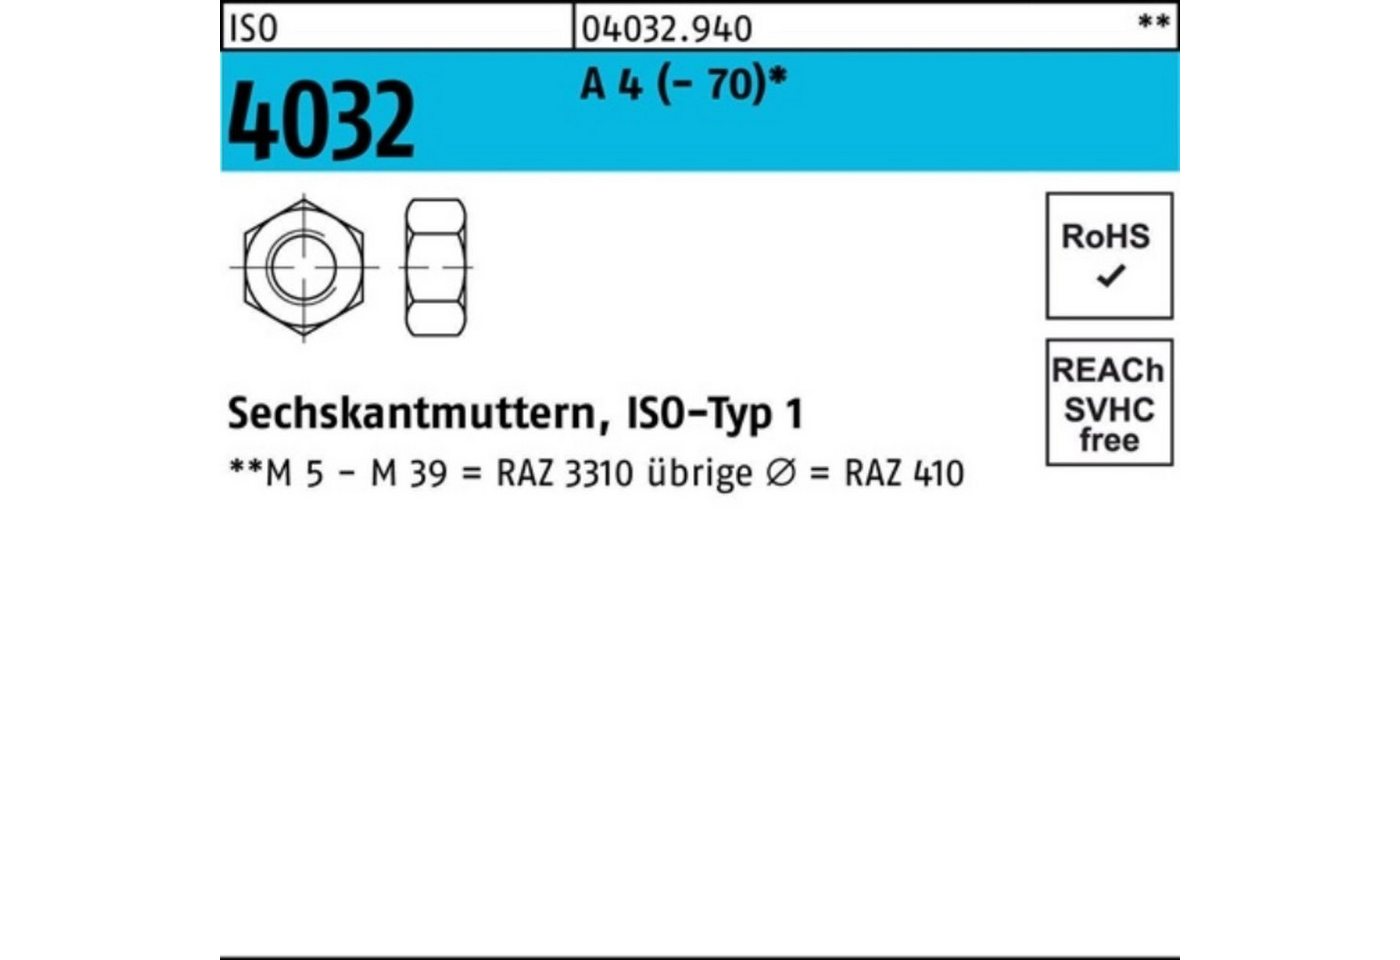 Bufab Muttern 100er Pack Sechskantmutter ISO 4032 M24 A 4 (70) 10 Stück ISO 4032 von Bufab